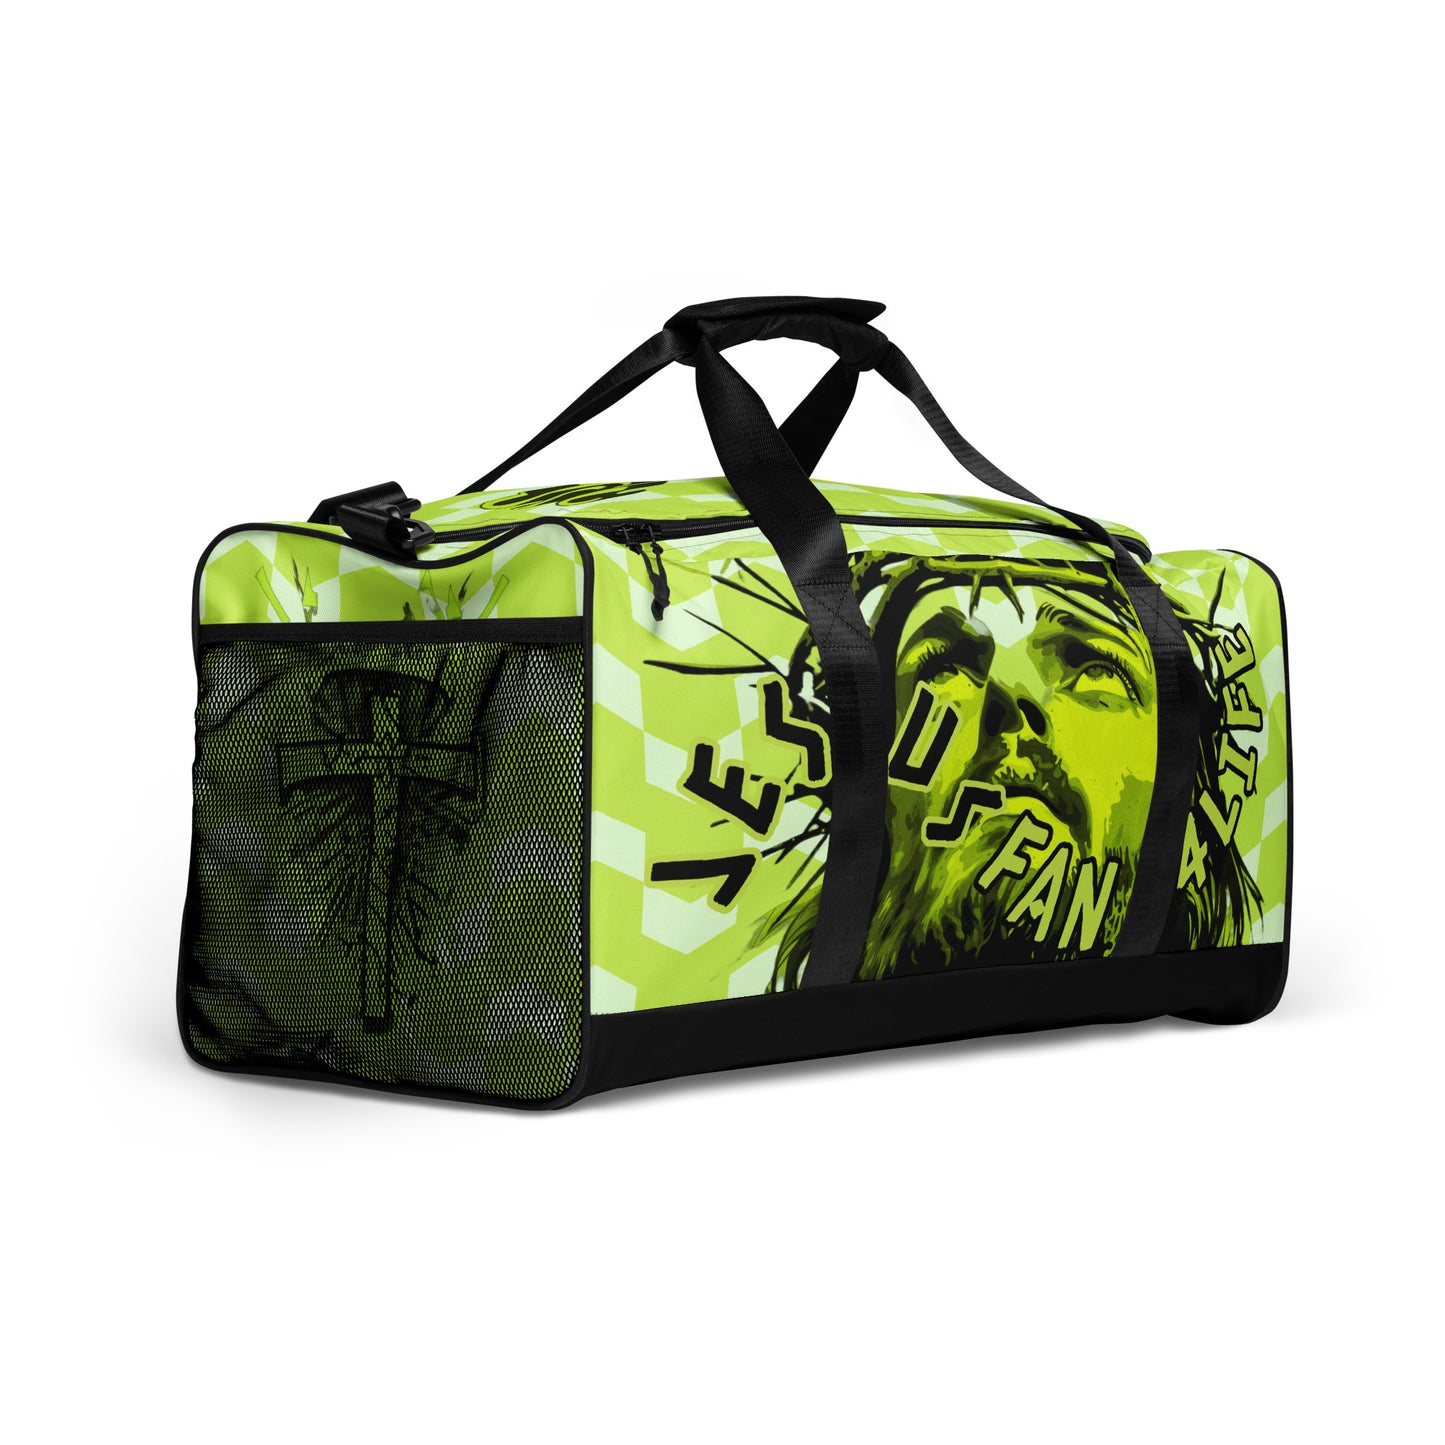 Jesus Fan 4Life- Duffle bag